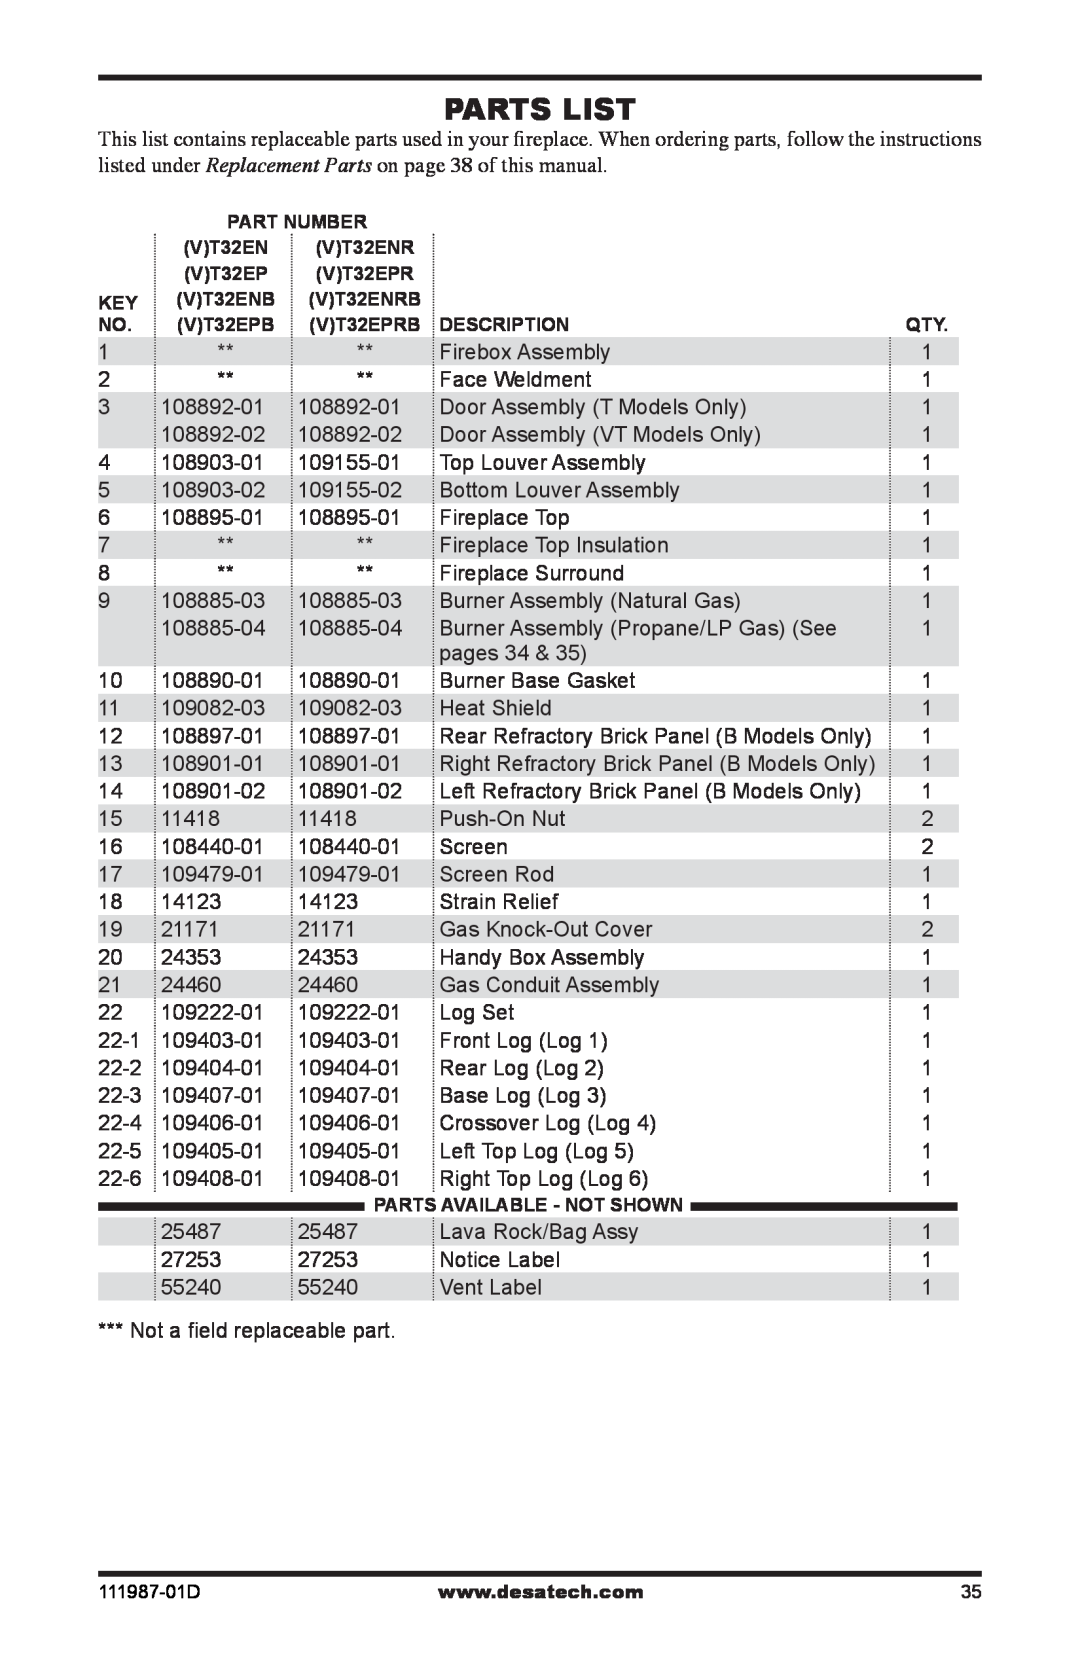 Desa (V)T32EN SERIES Parts List, Rear Refractory Brick Panel B Models Only, Right Refractory Brick Panel B Models Only 